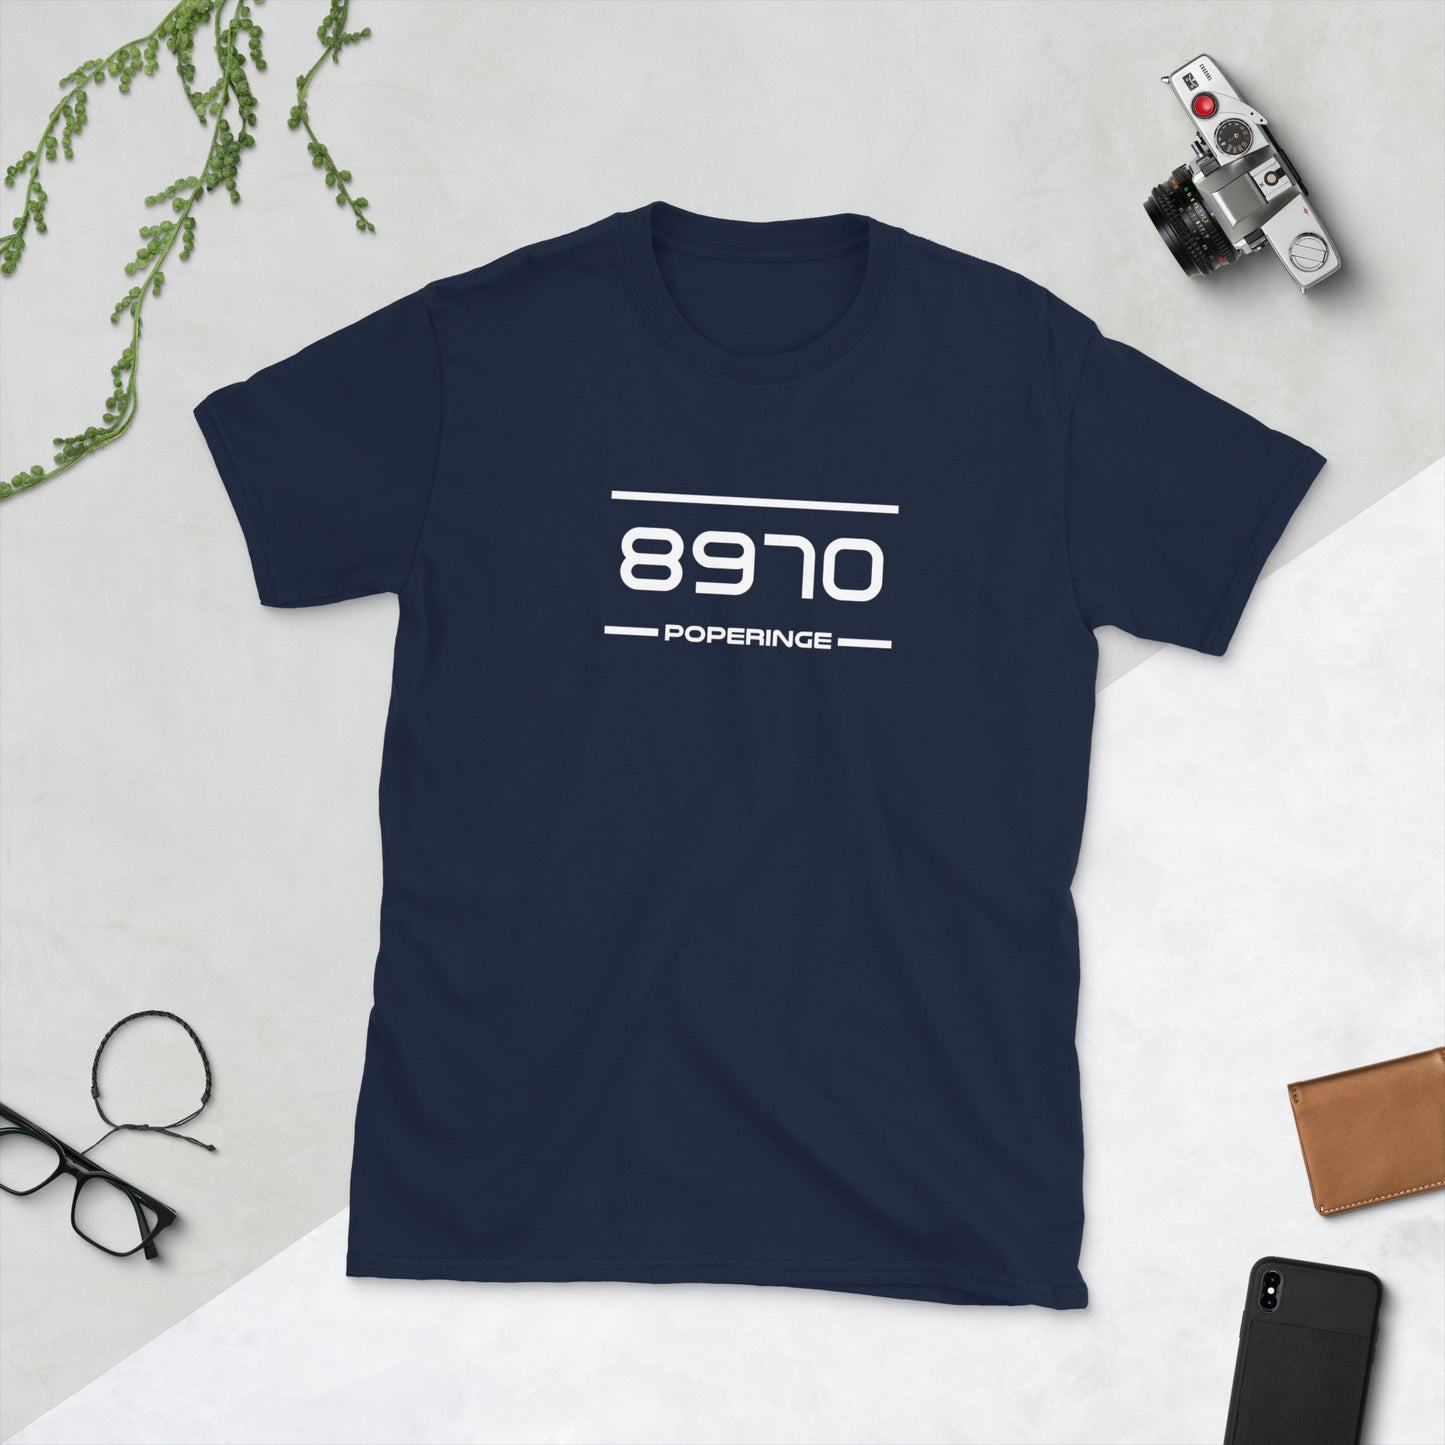 Tshirt - 8970 - Poperinge